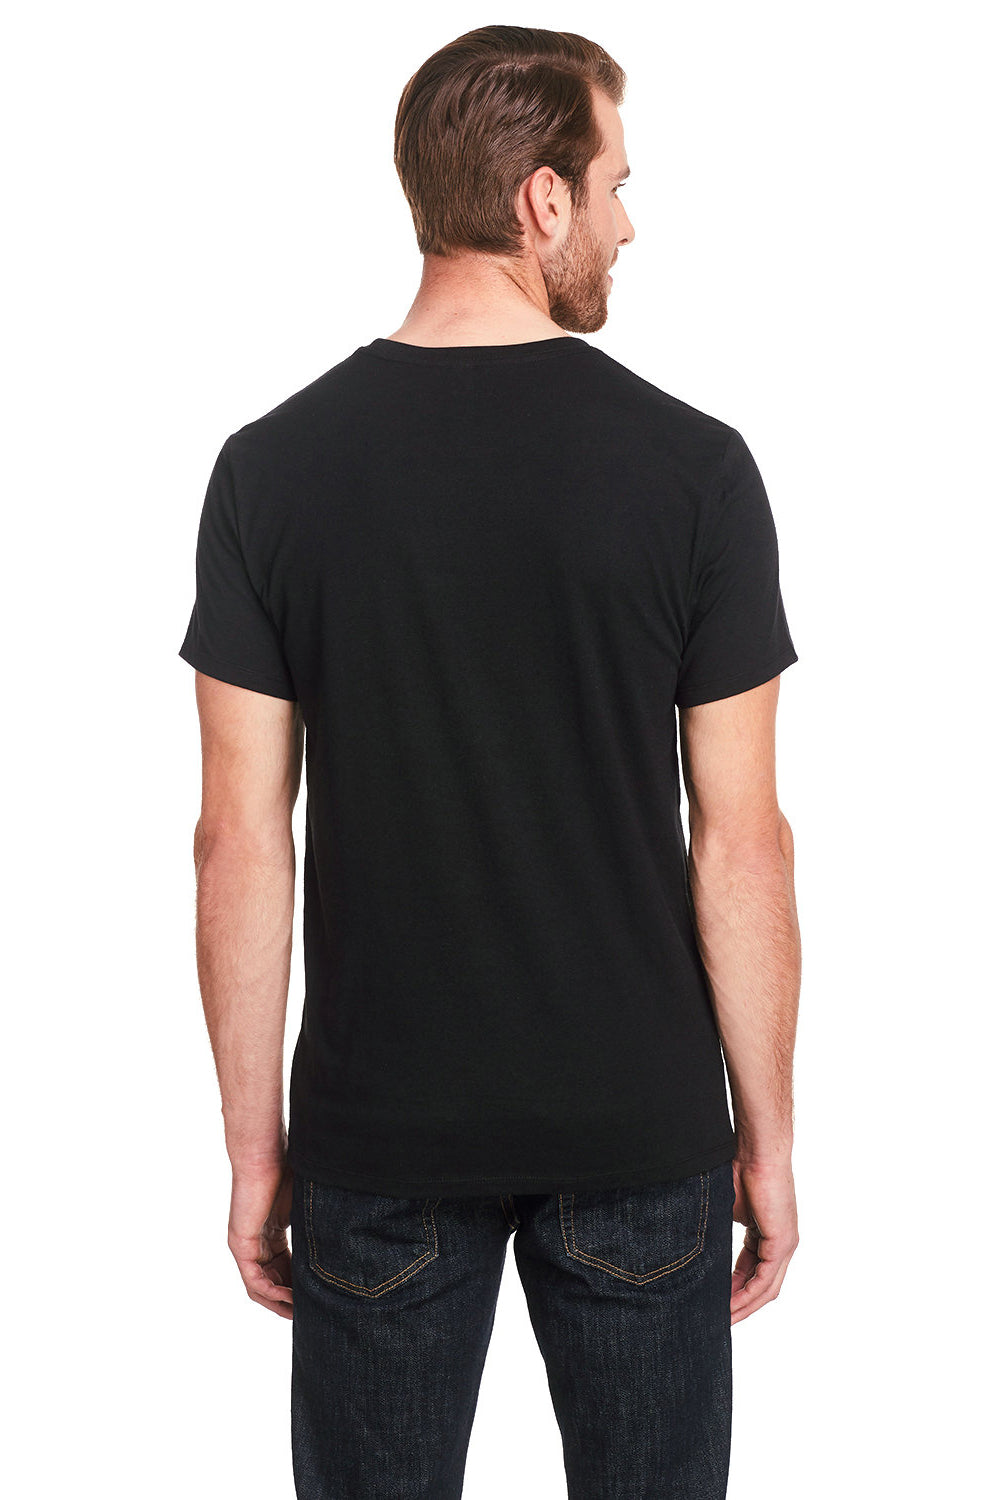 Threadfast Apparel 102A Mens Short Sleeve Crewneck T-Shirt Solid Black Back